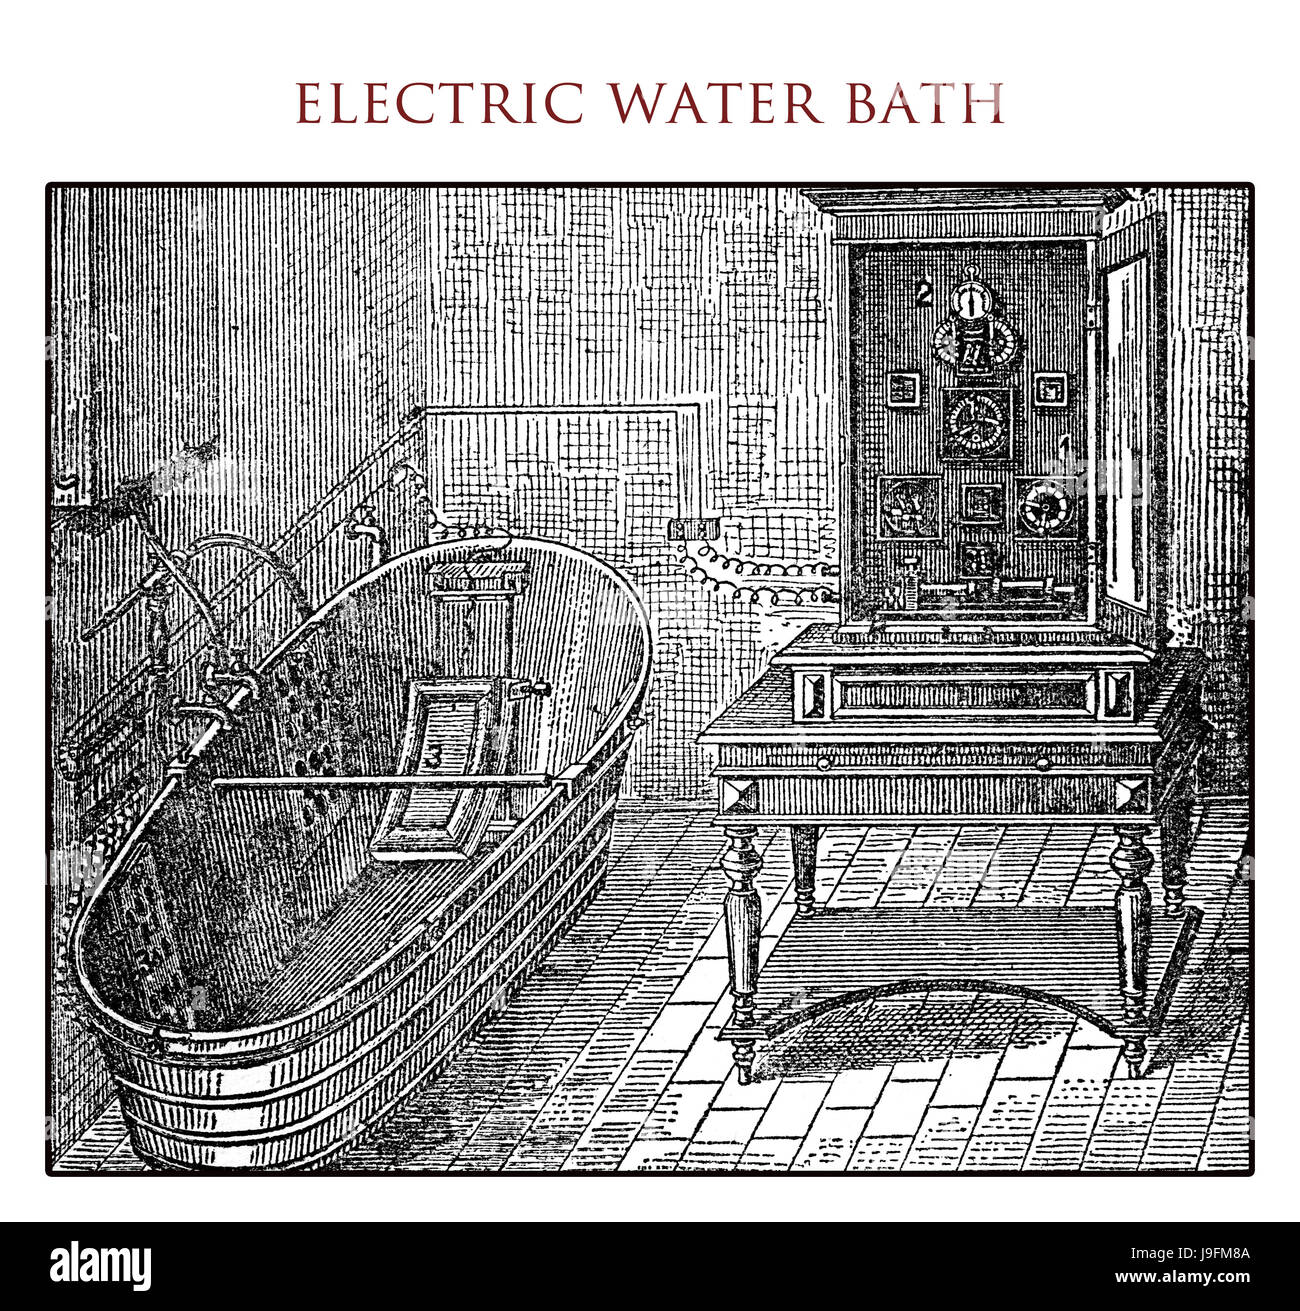 Electric water bath,vintage illustration Stock Photo